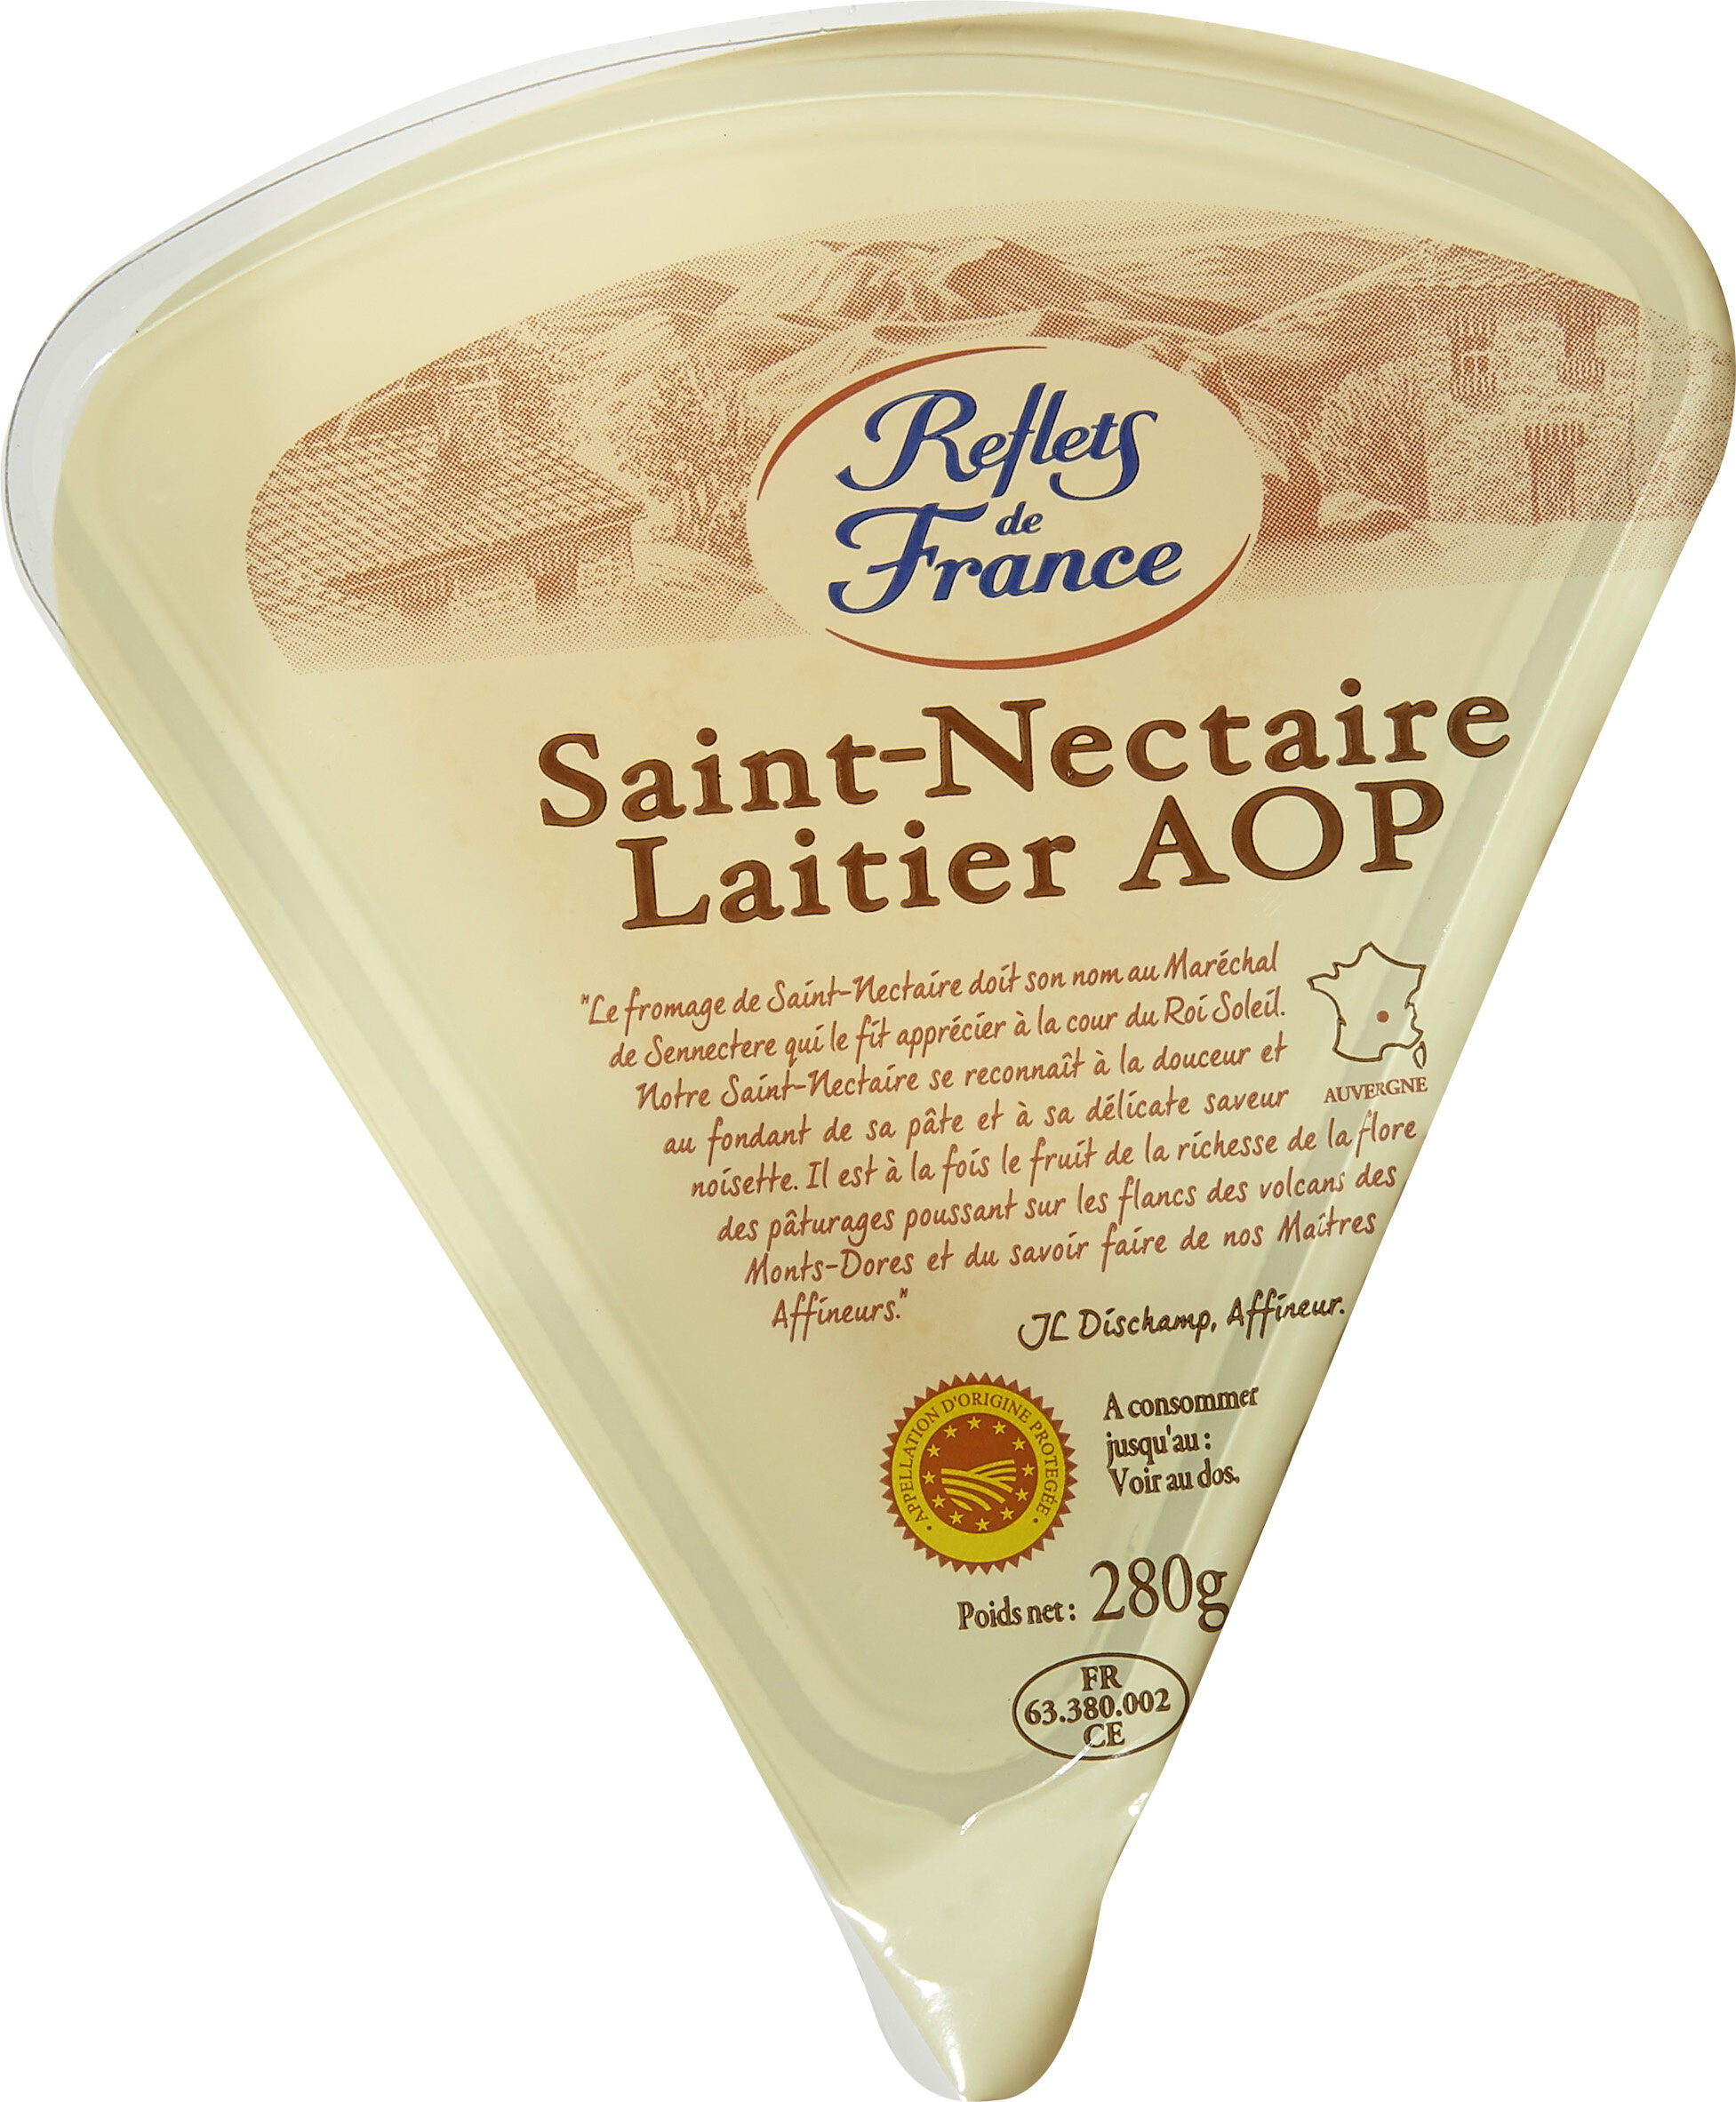 Fromage Saint Nectaire laitier AOP - Product - fr